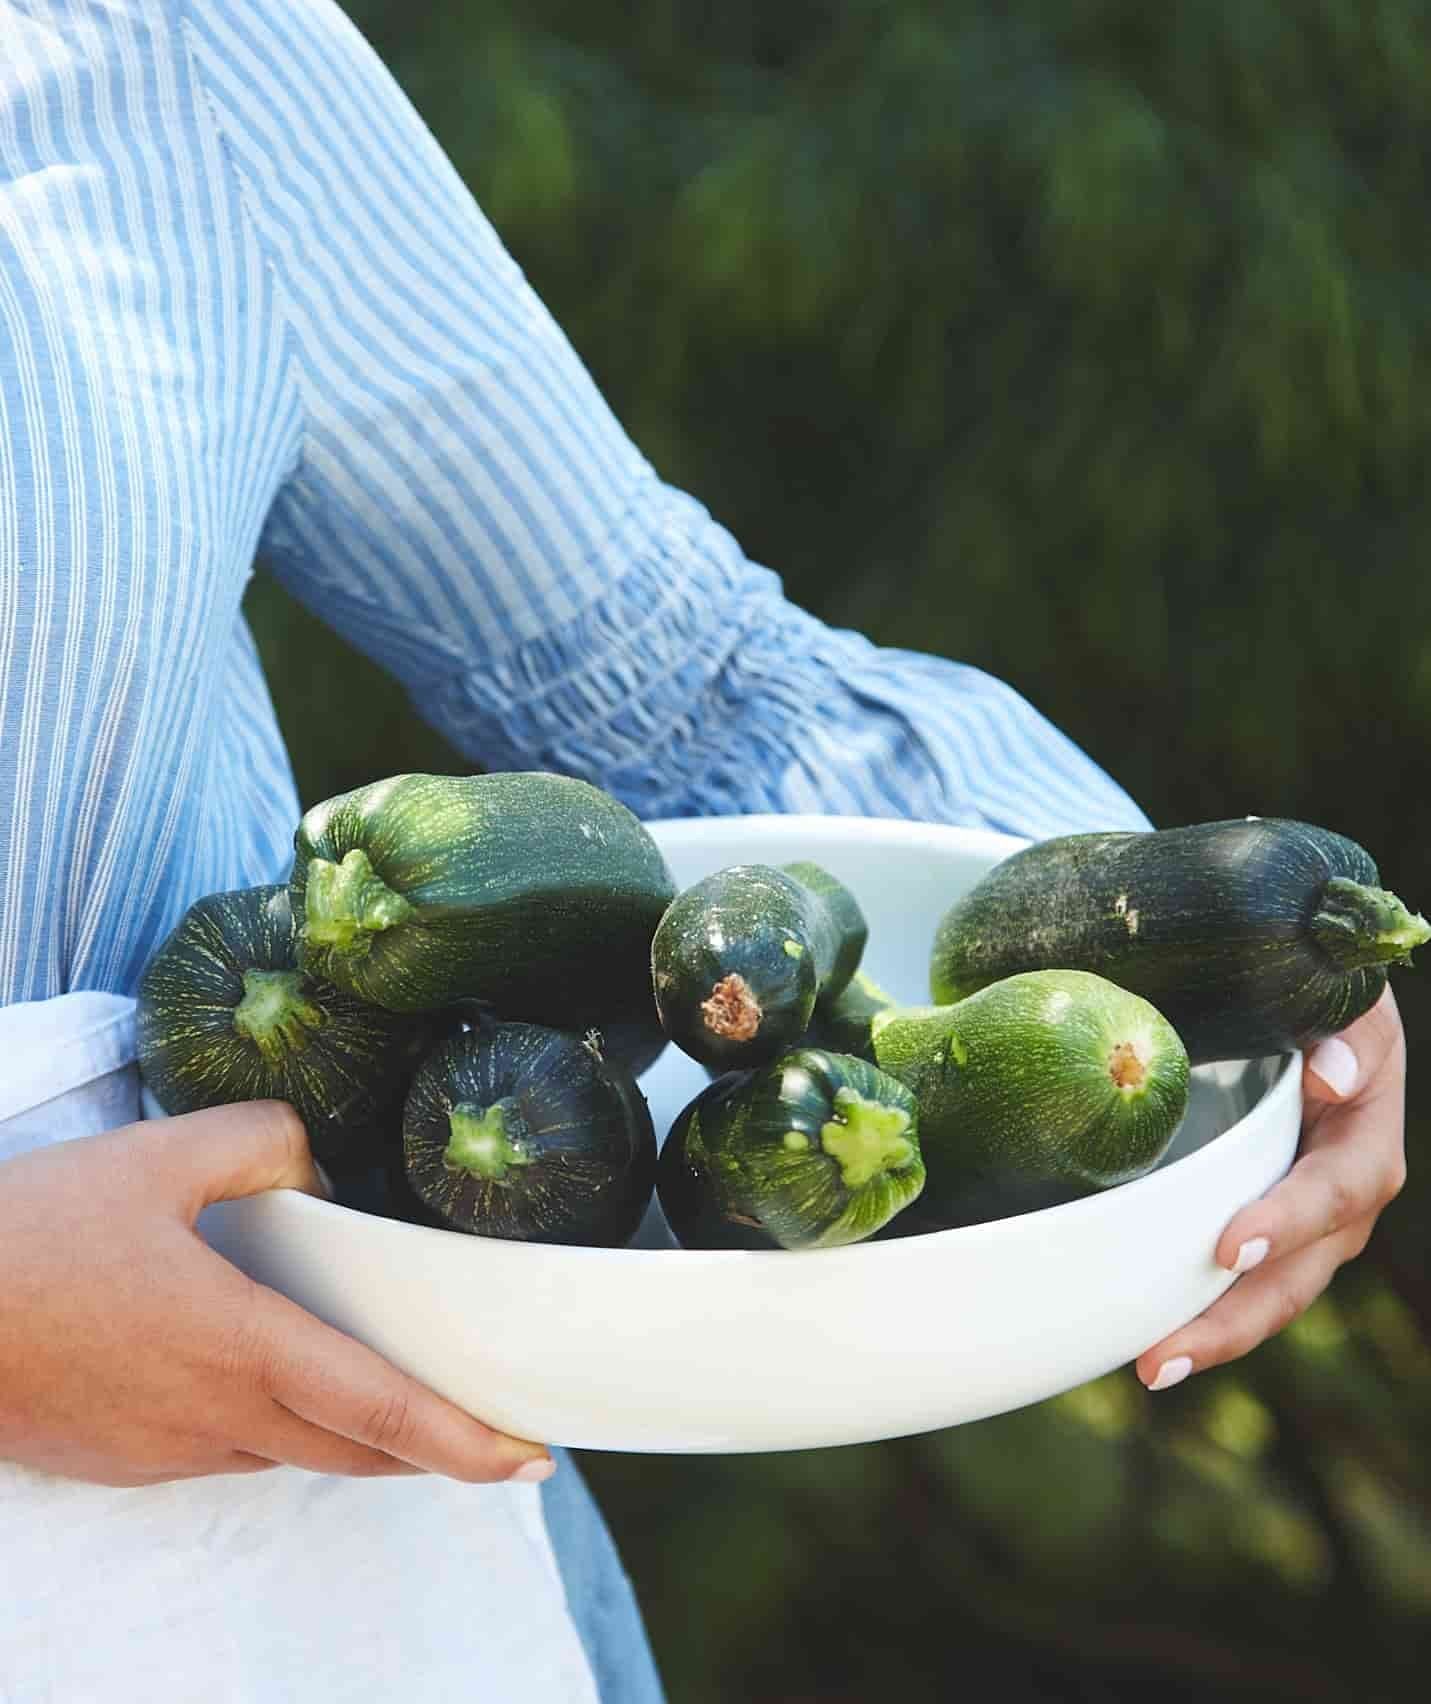 Growing Zucchini - The Beginners Guide